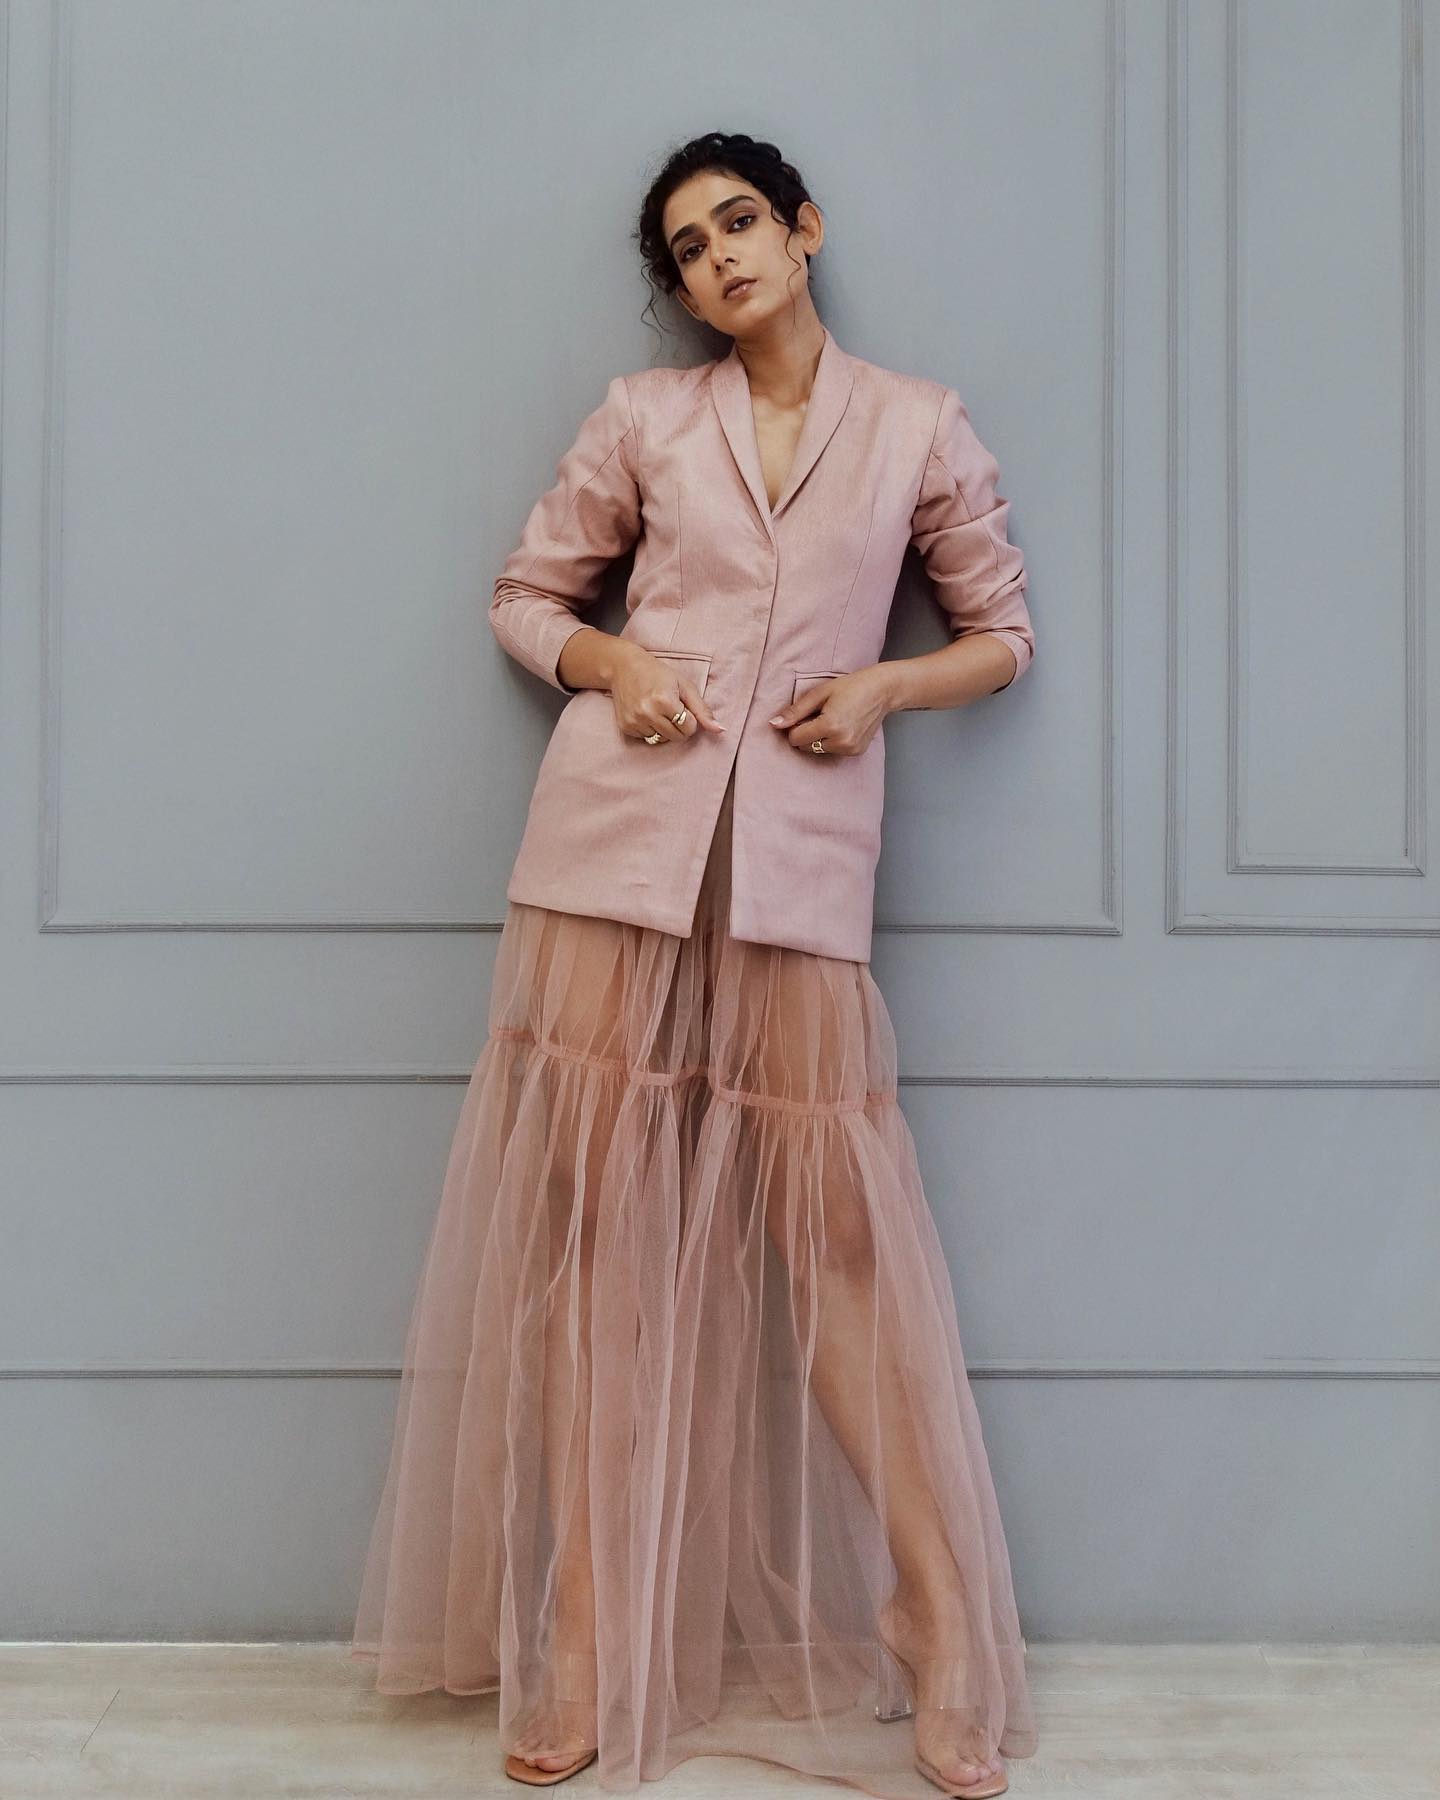 Aakanksha Singh In Salmon Pink Fusion Dress Look Vintage & Chic